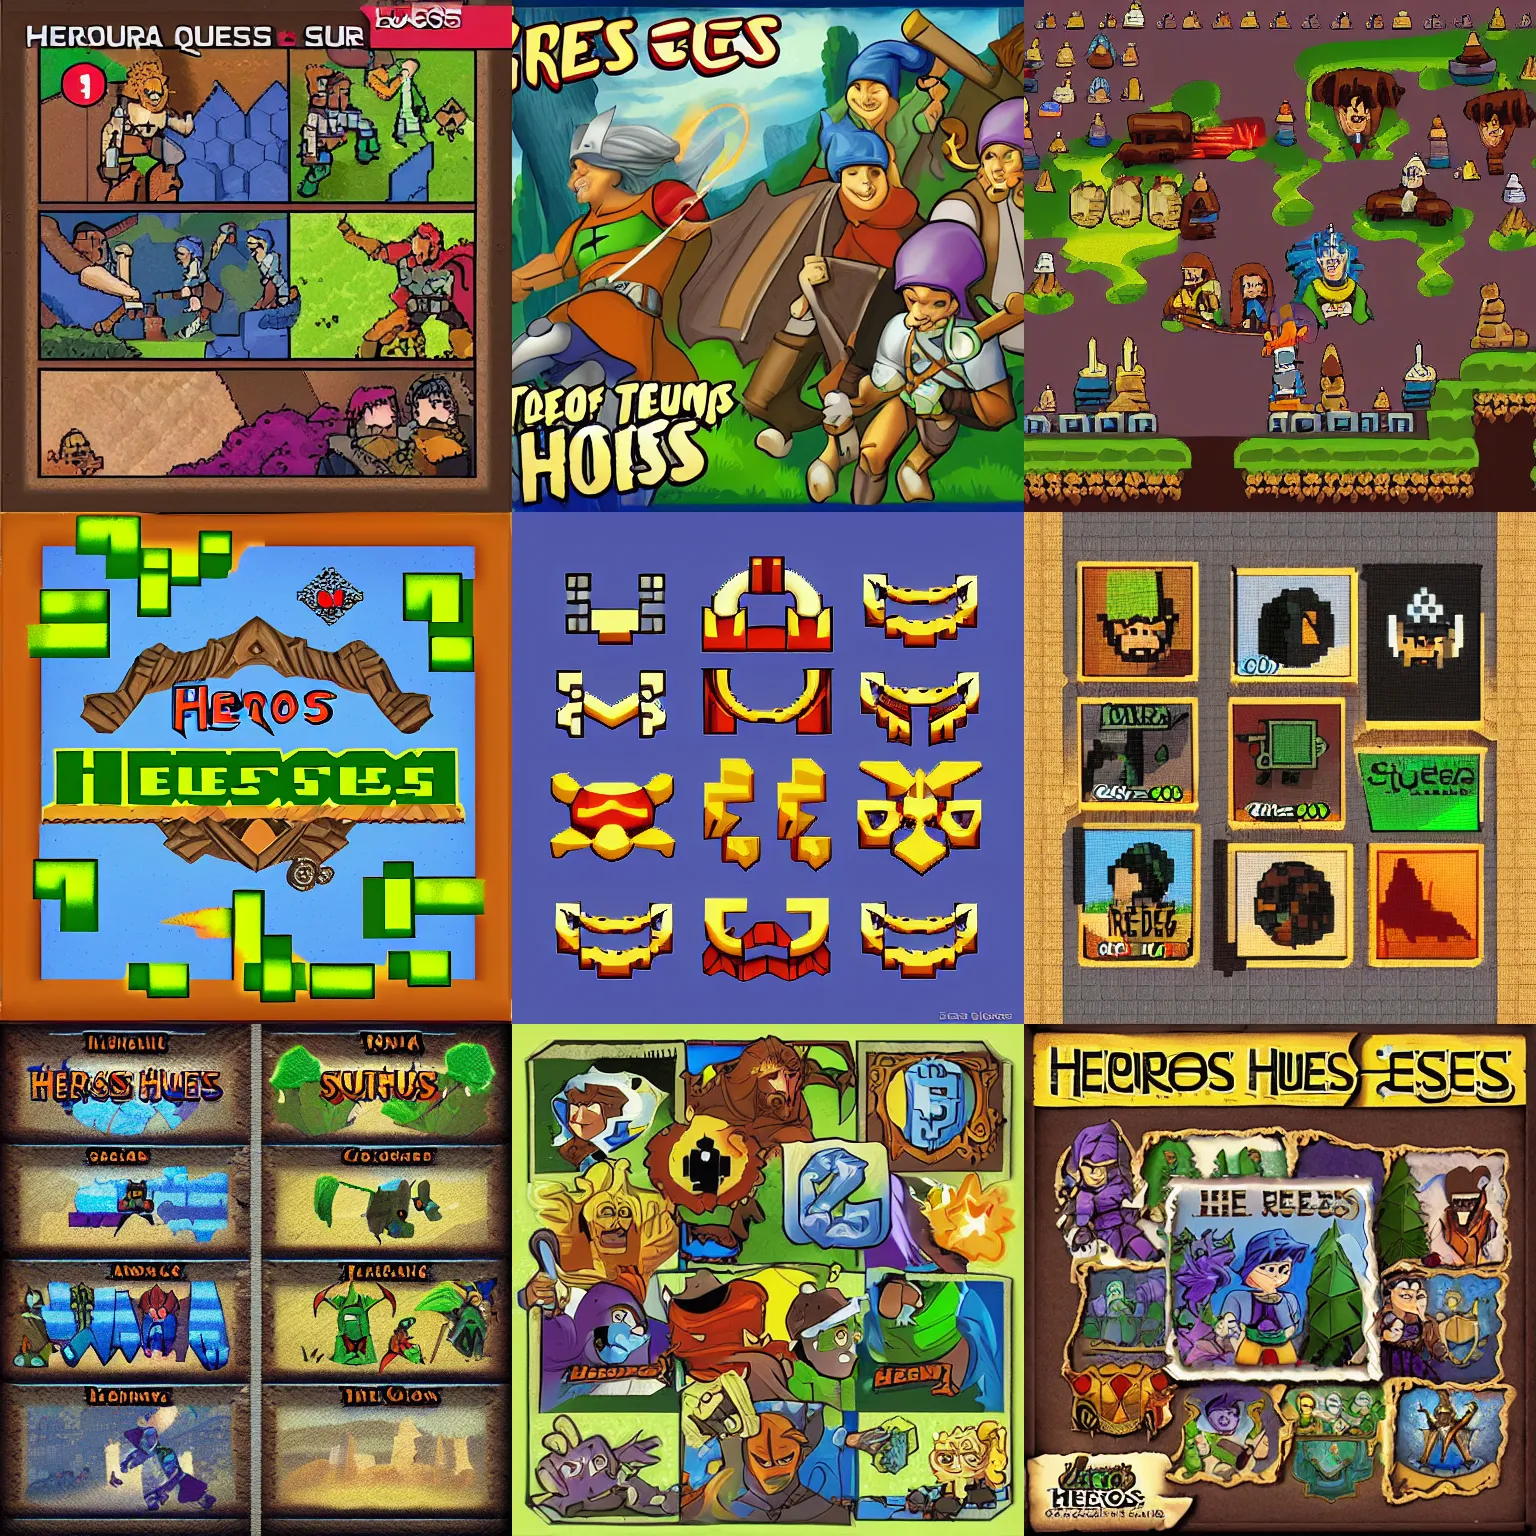 Prompt: heros quest 1 by sierra, pixel graphics